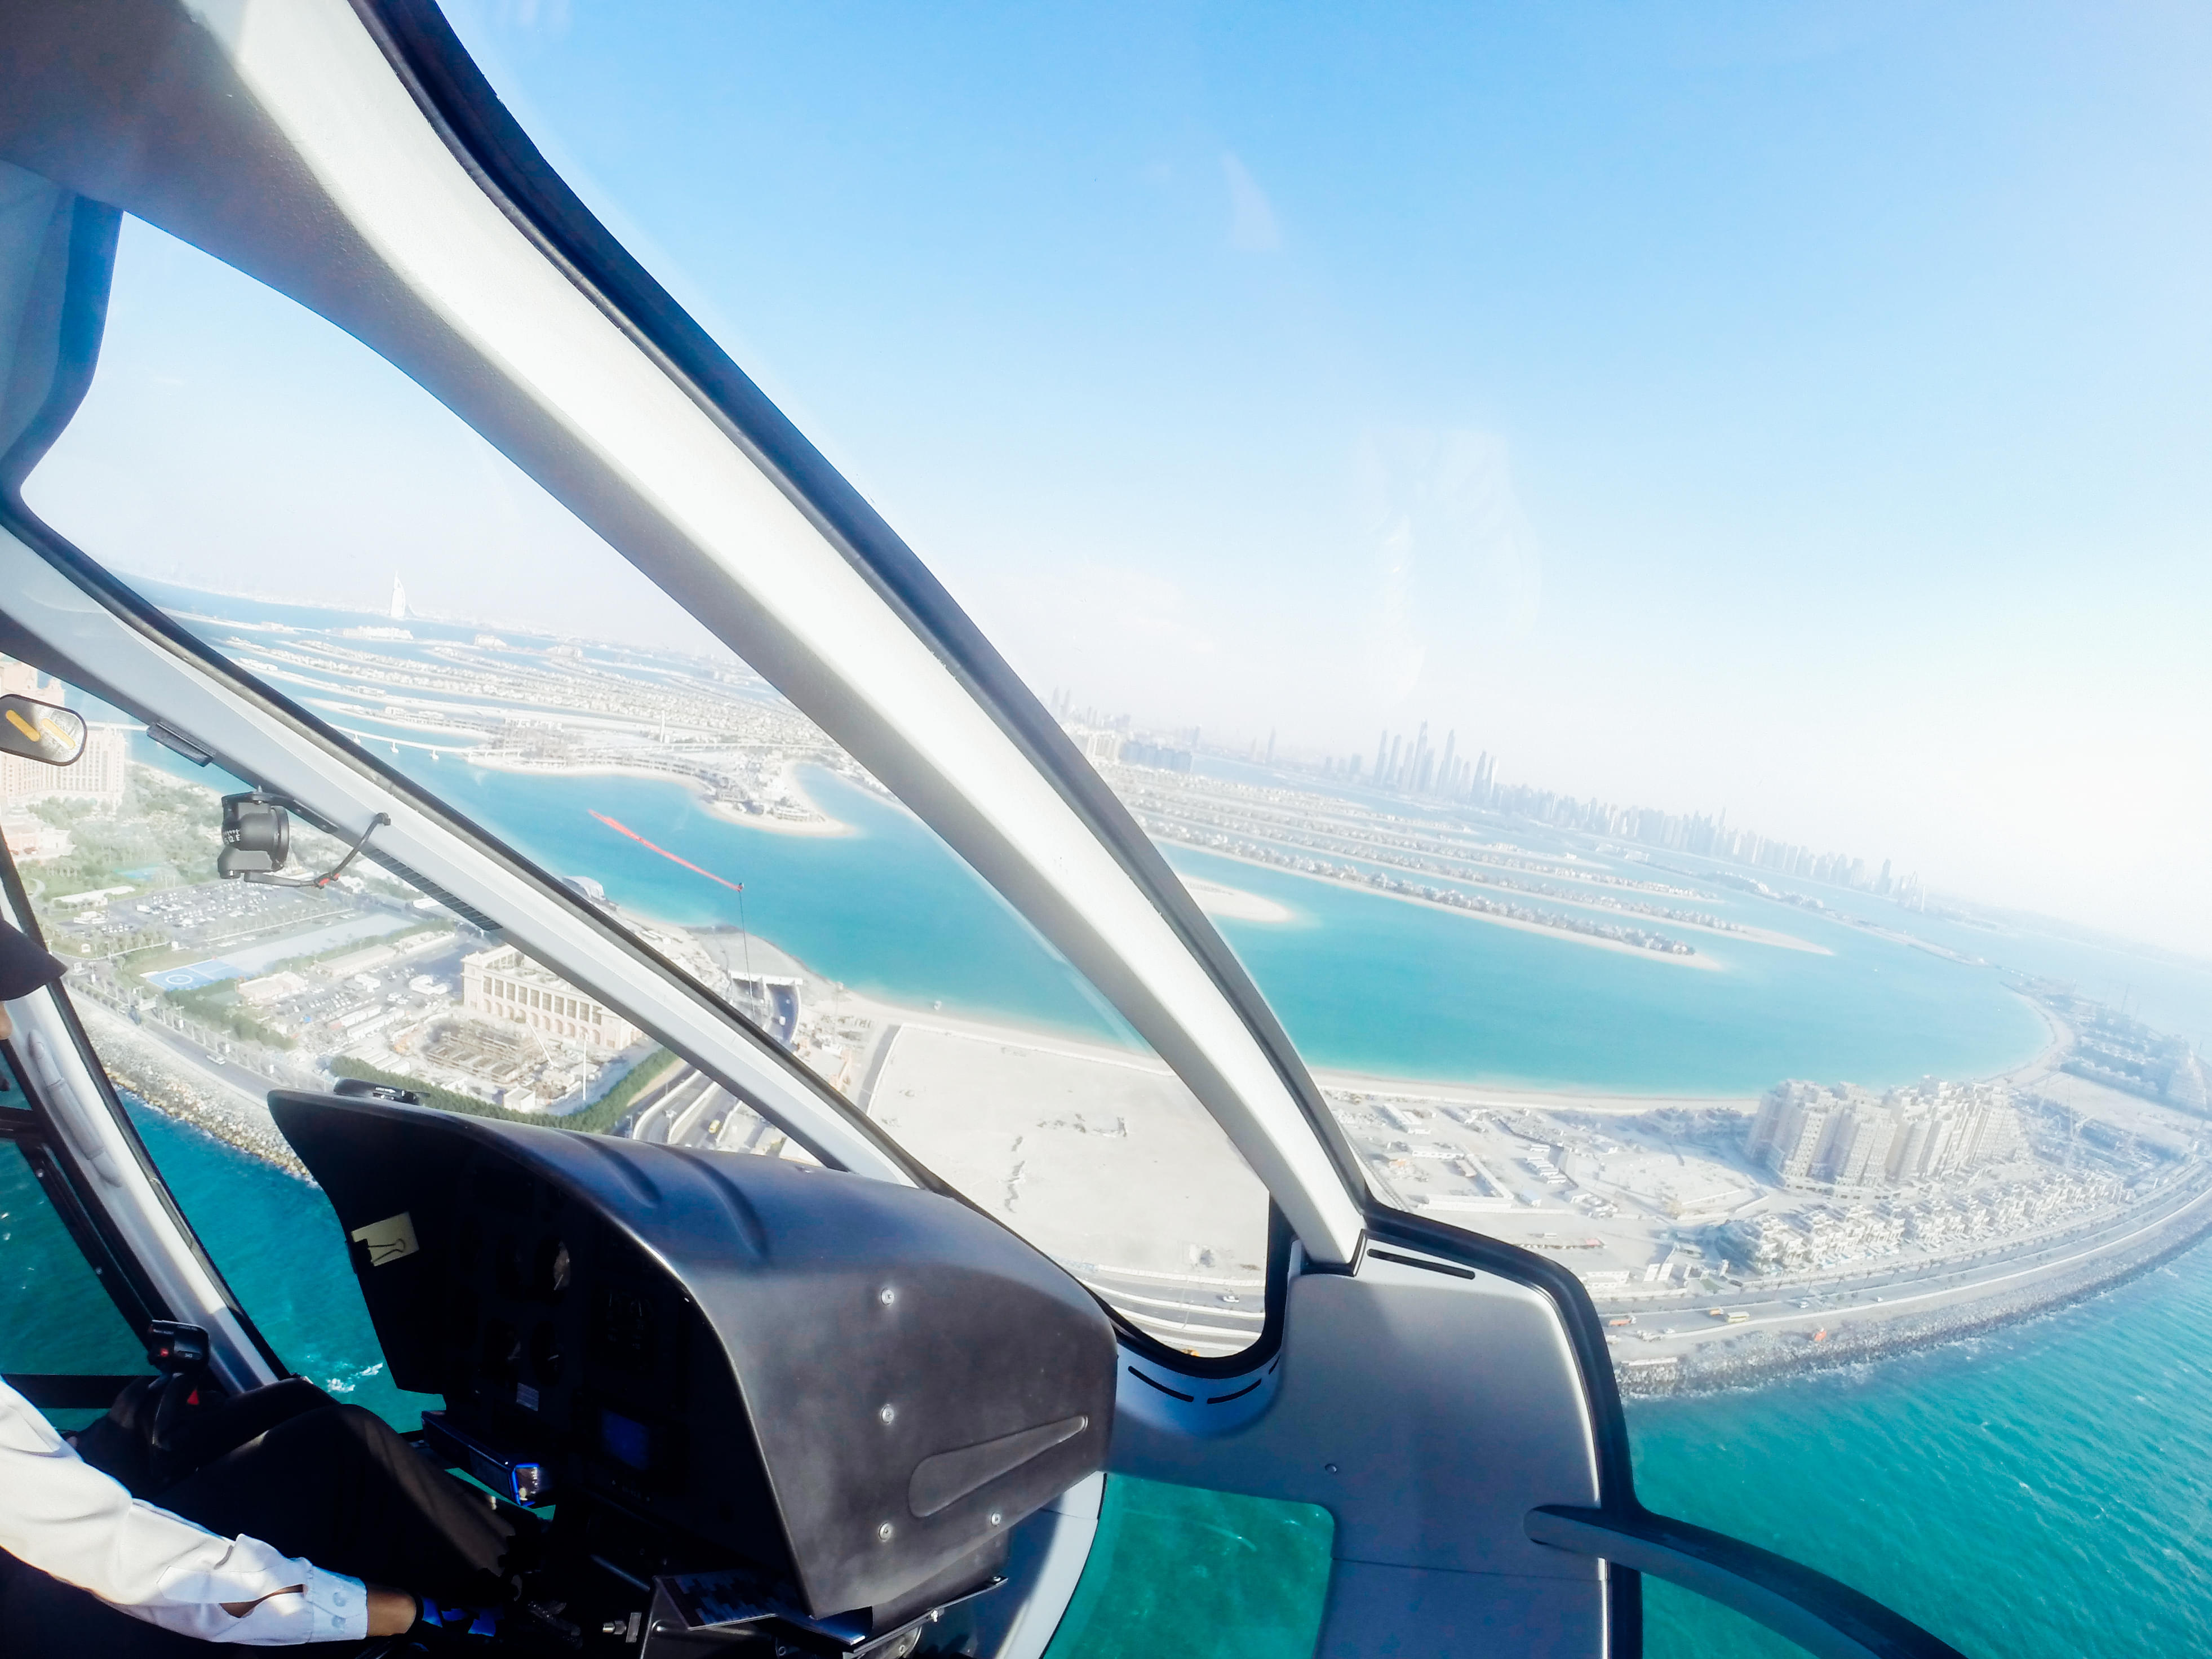 Chopper Tours in Dubai